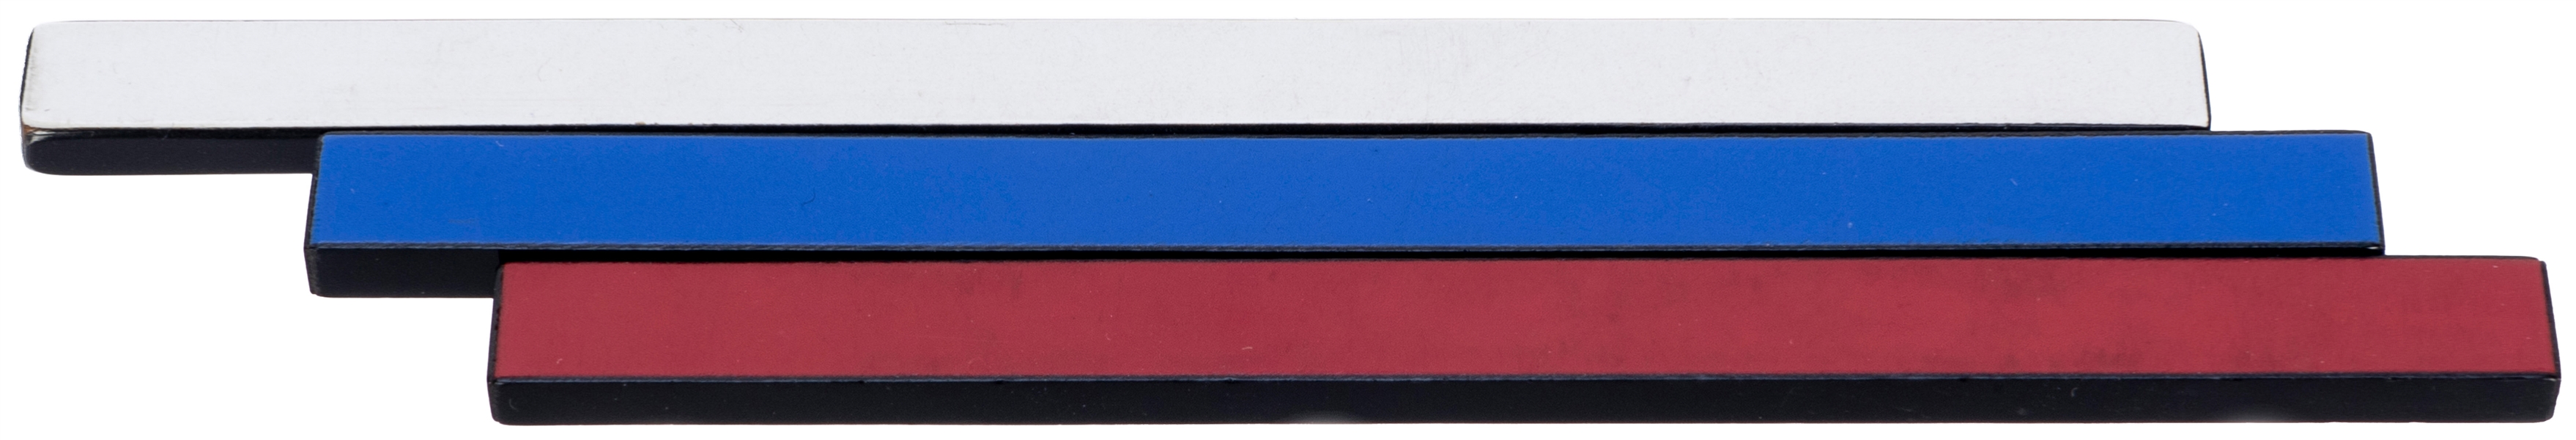  Tel Tale Color Sticks. Holland: Eddy Taytelbaum, 1970s. Set...